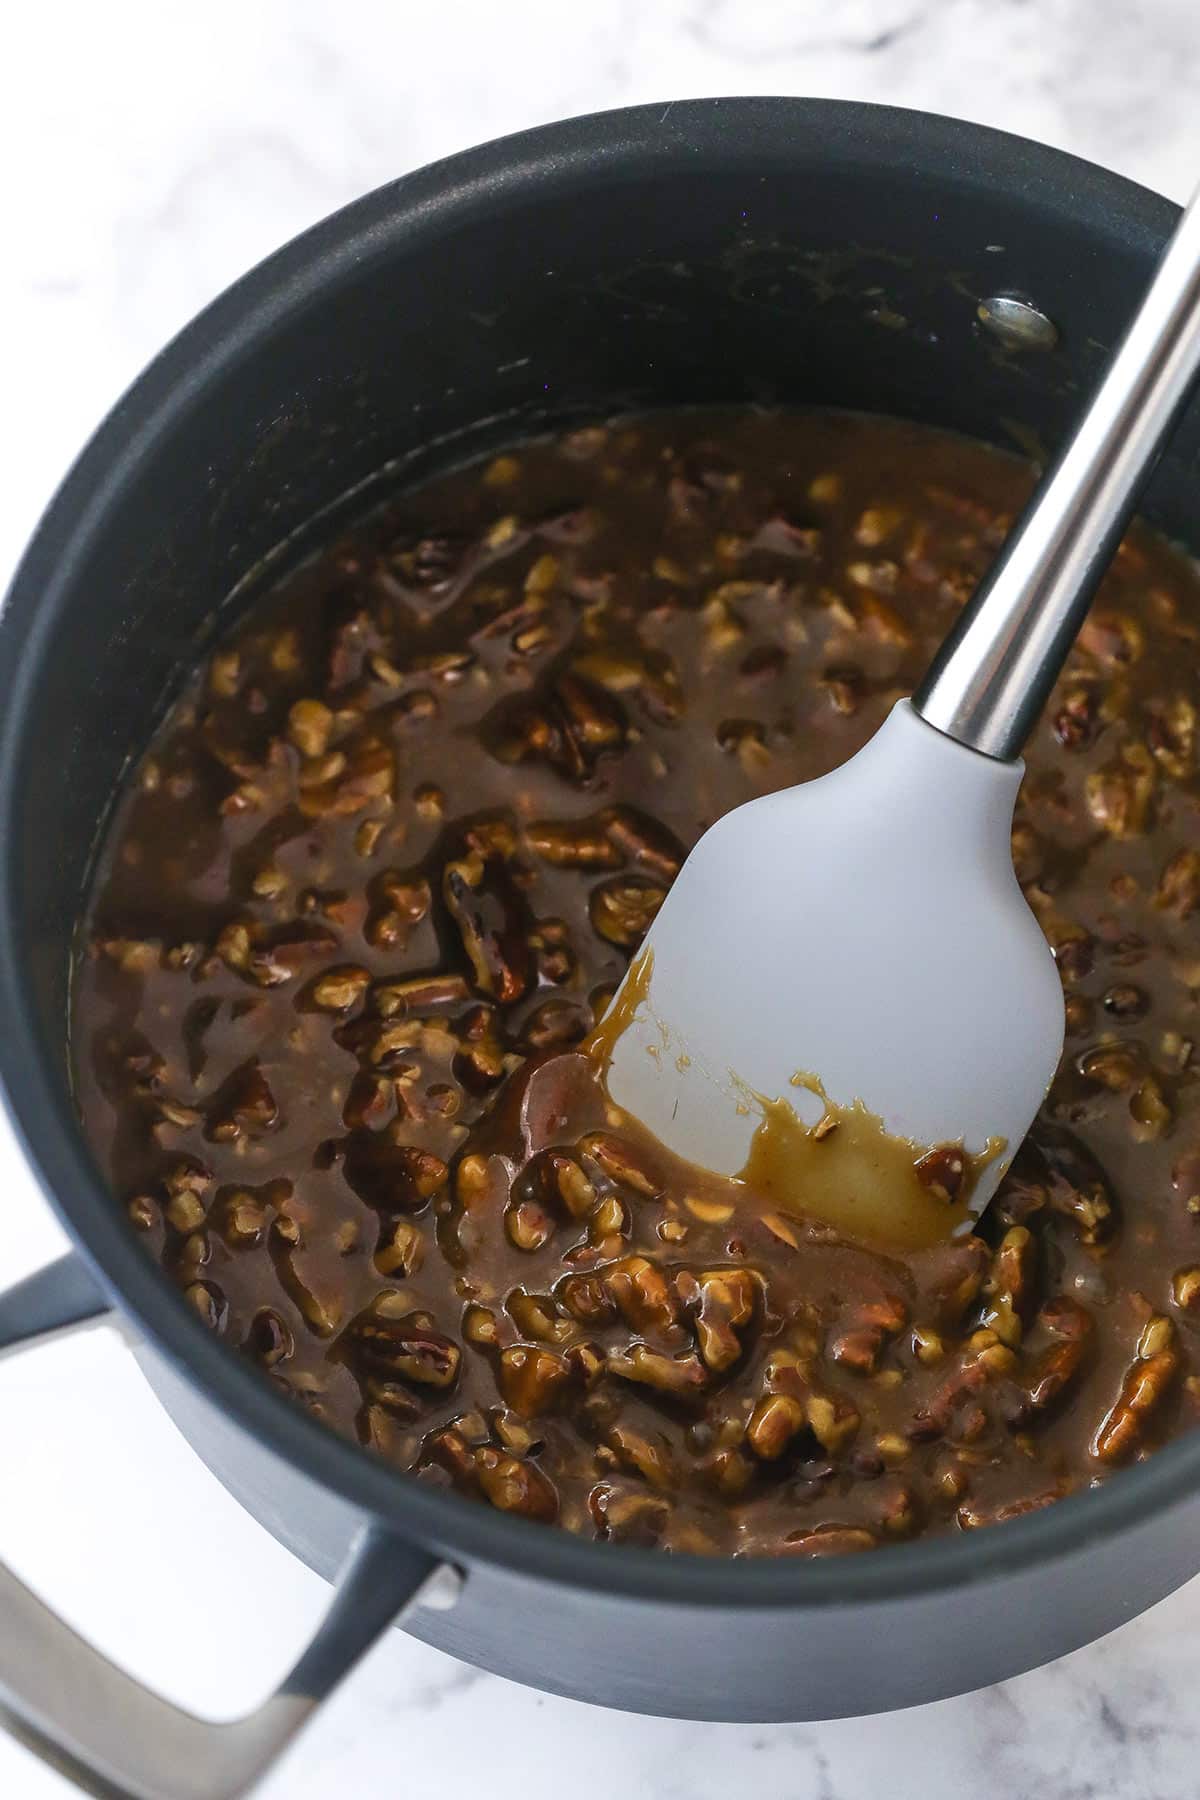 Stirring pecan topping in a saucepan.